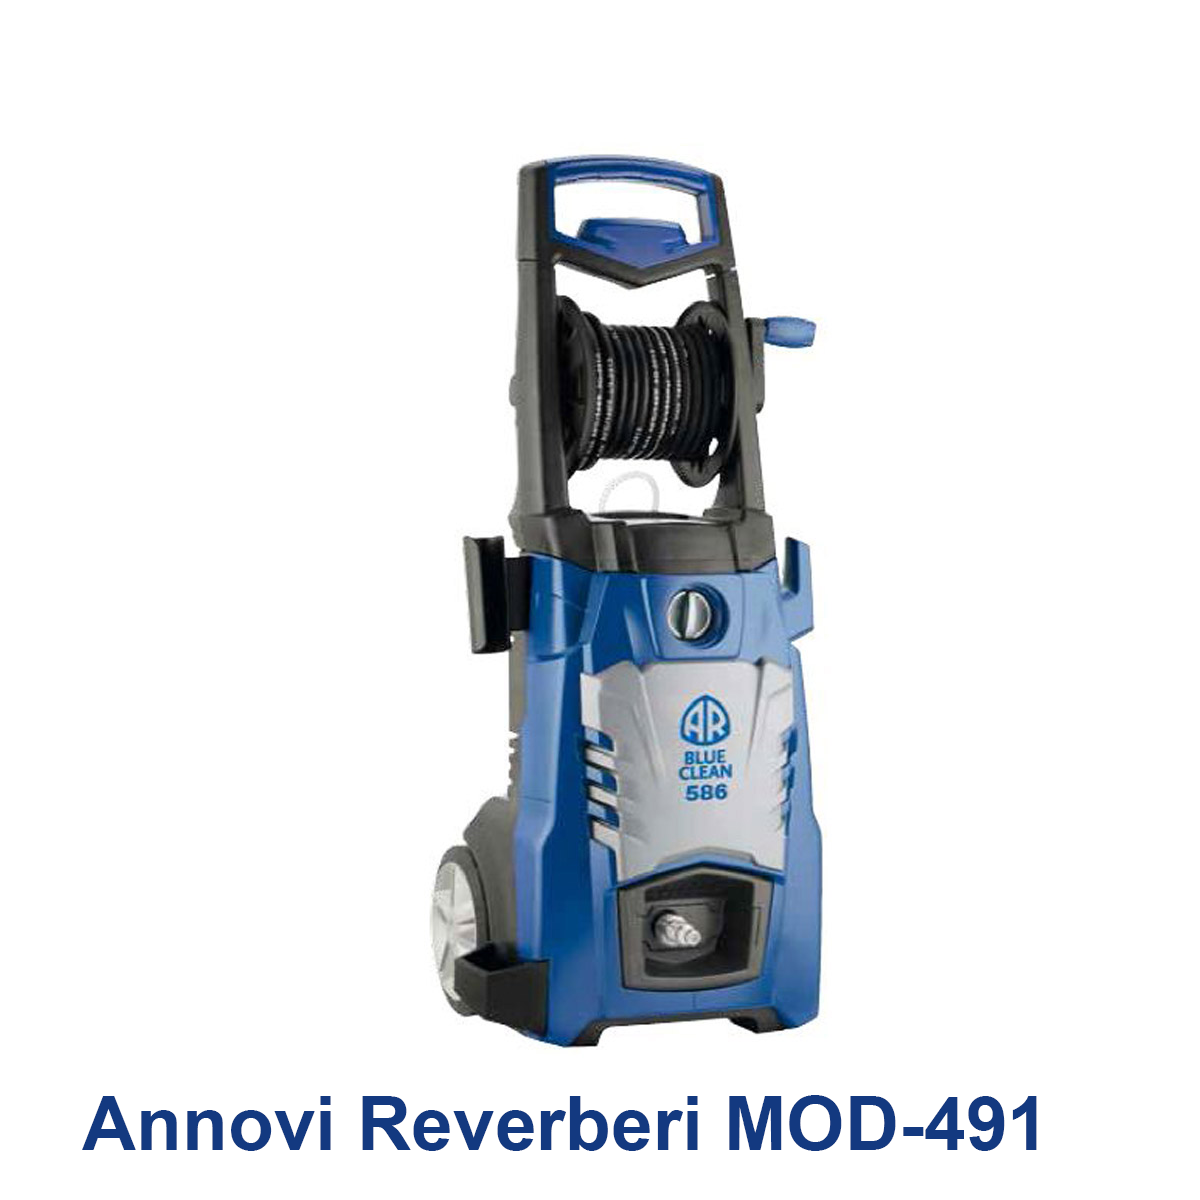 Annovi-Reverberi-MOD-491